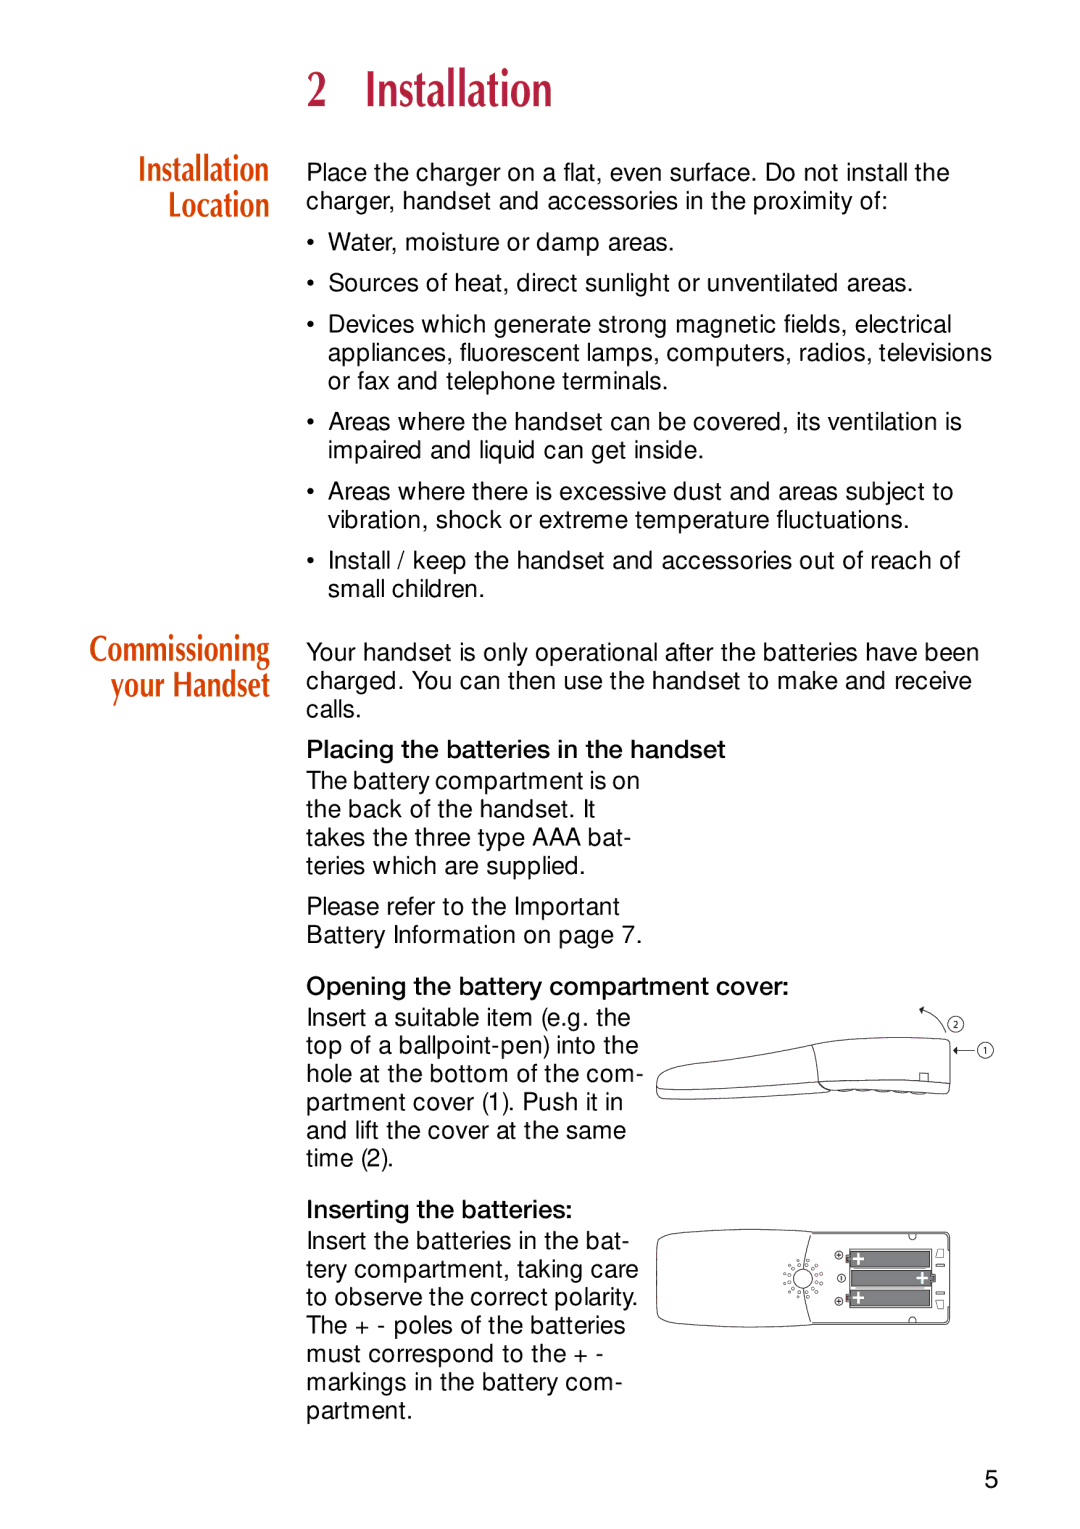 NEC C944 manual Installation Location, Commissioning your Handset 